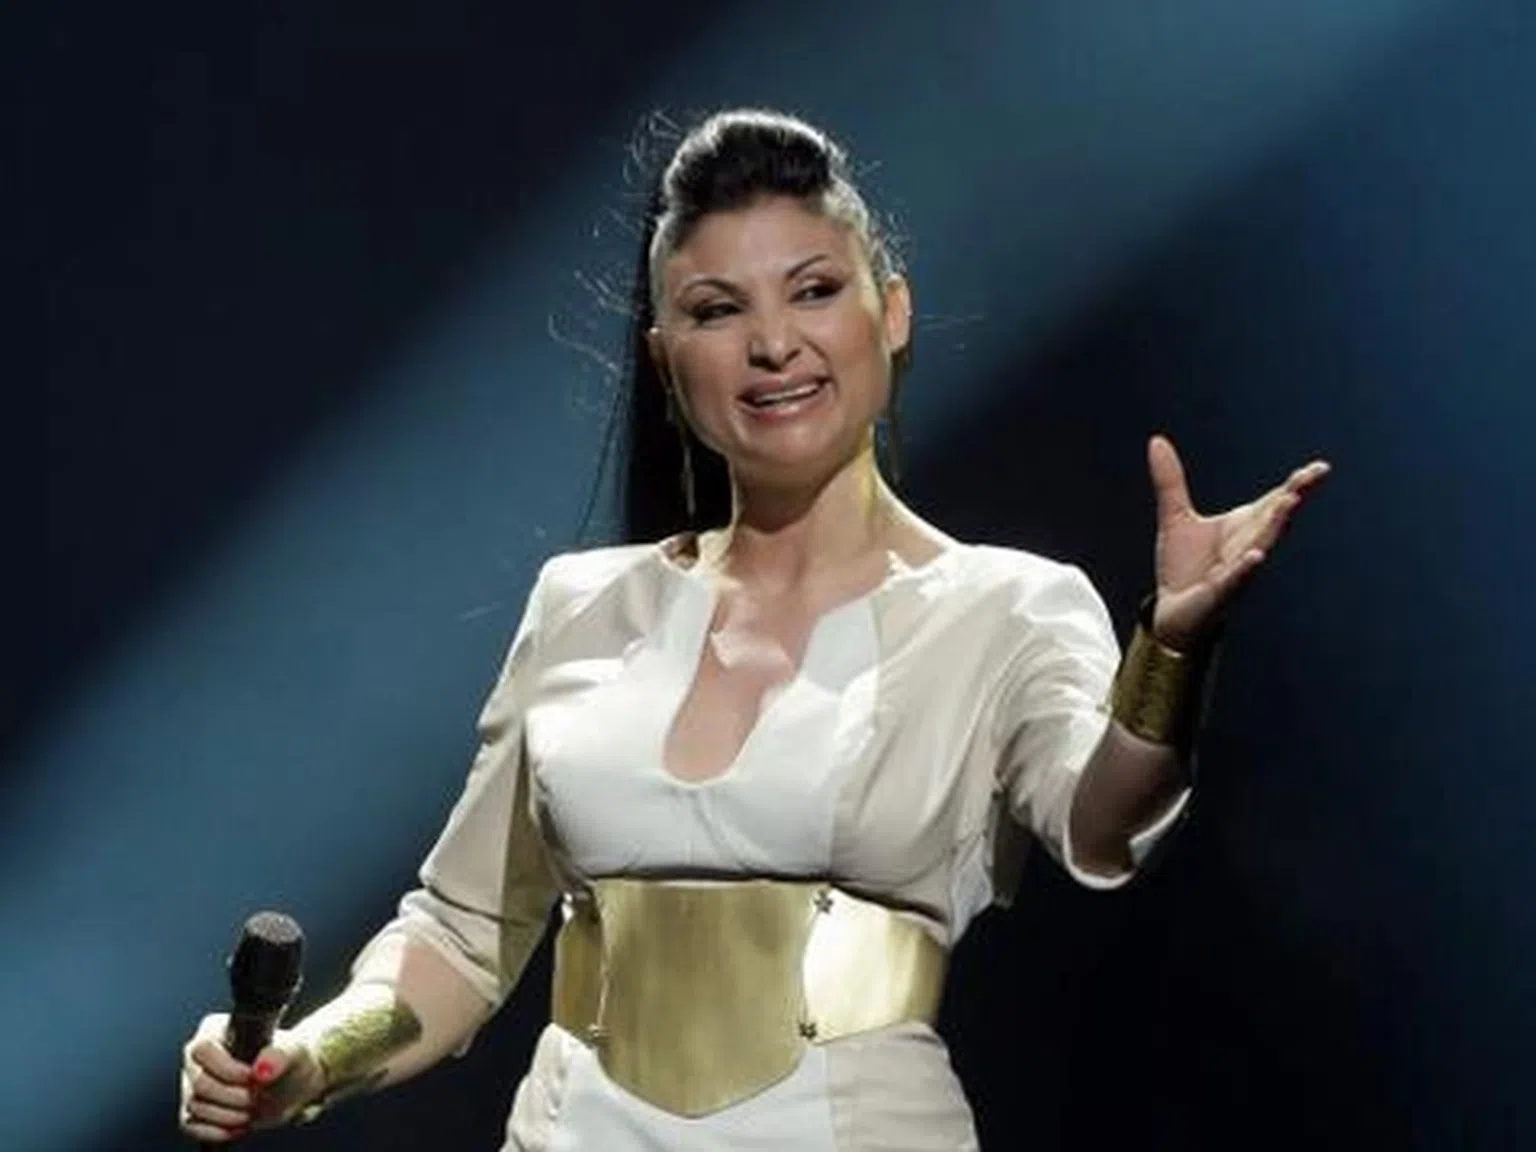 Софи Маринова не се класира за финала на "Евровизия 2012"